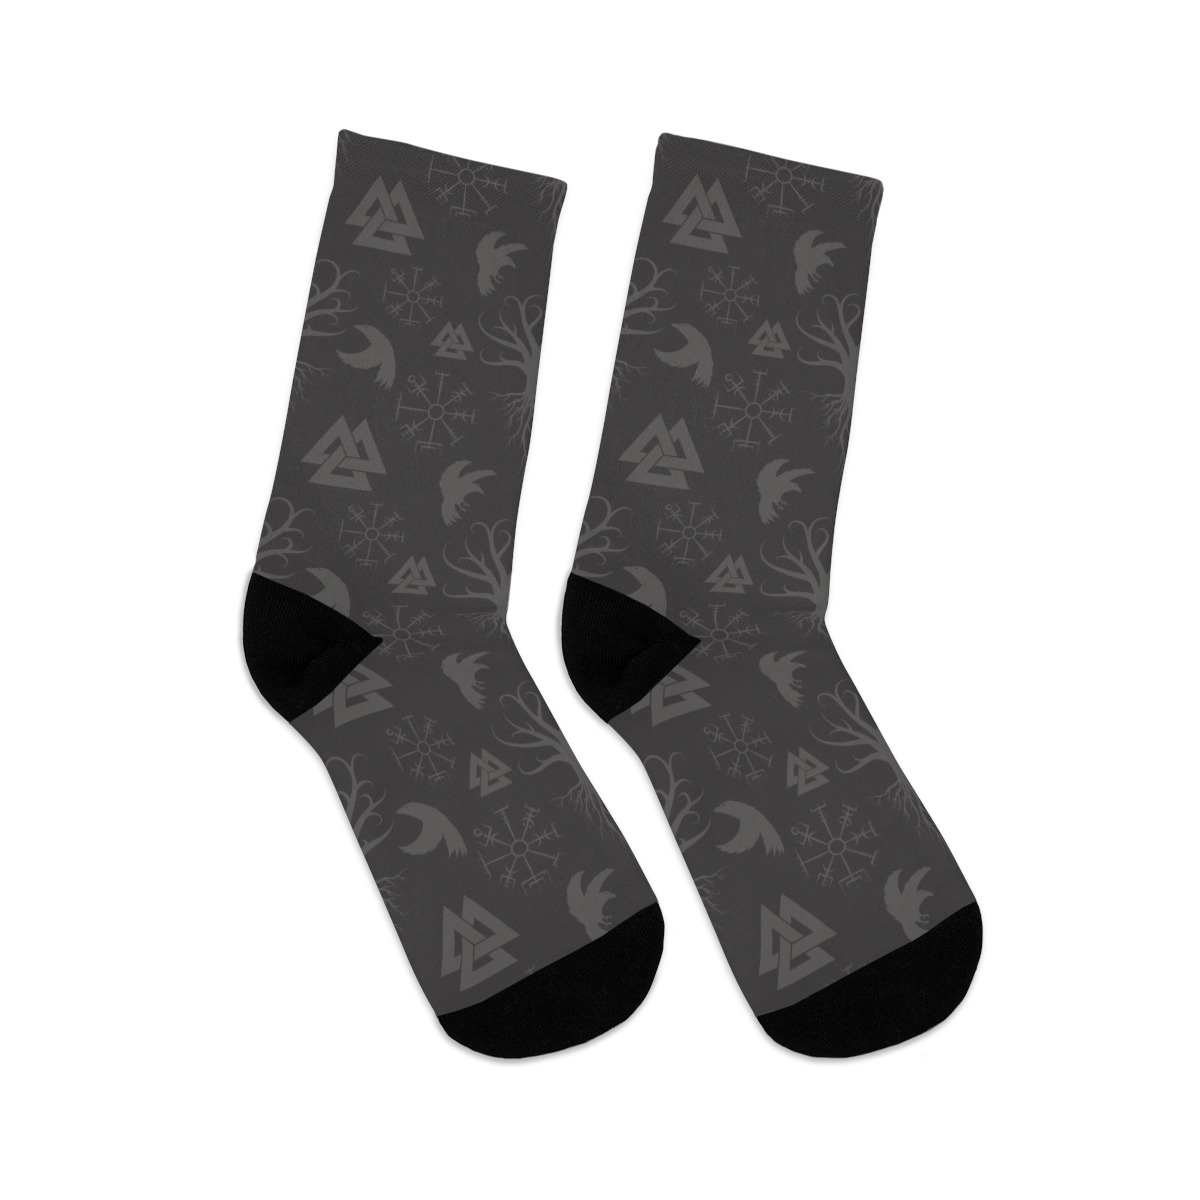 Gray Norse Symbols Socks